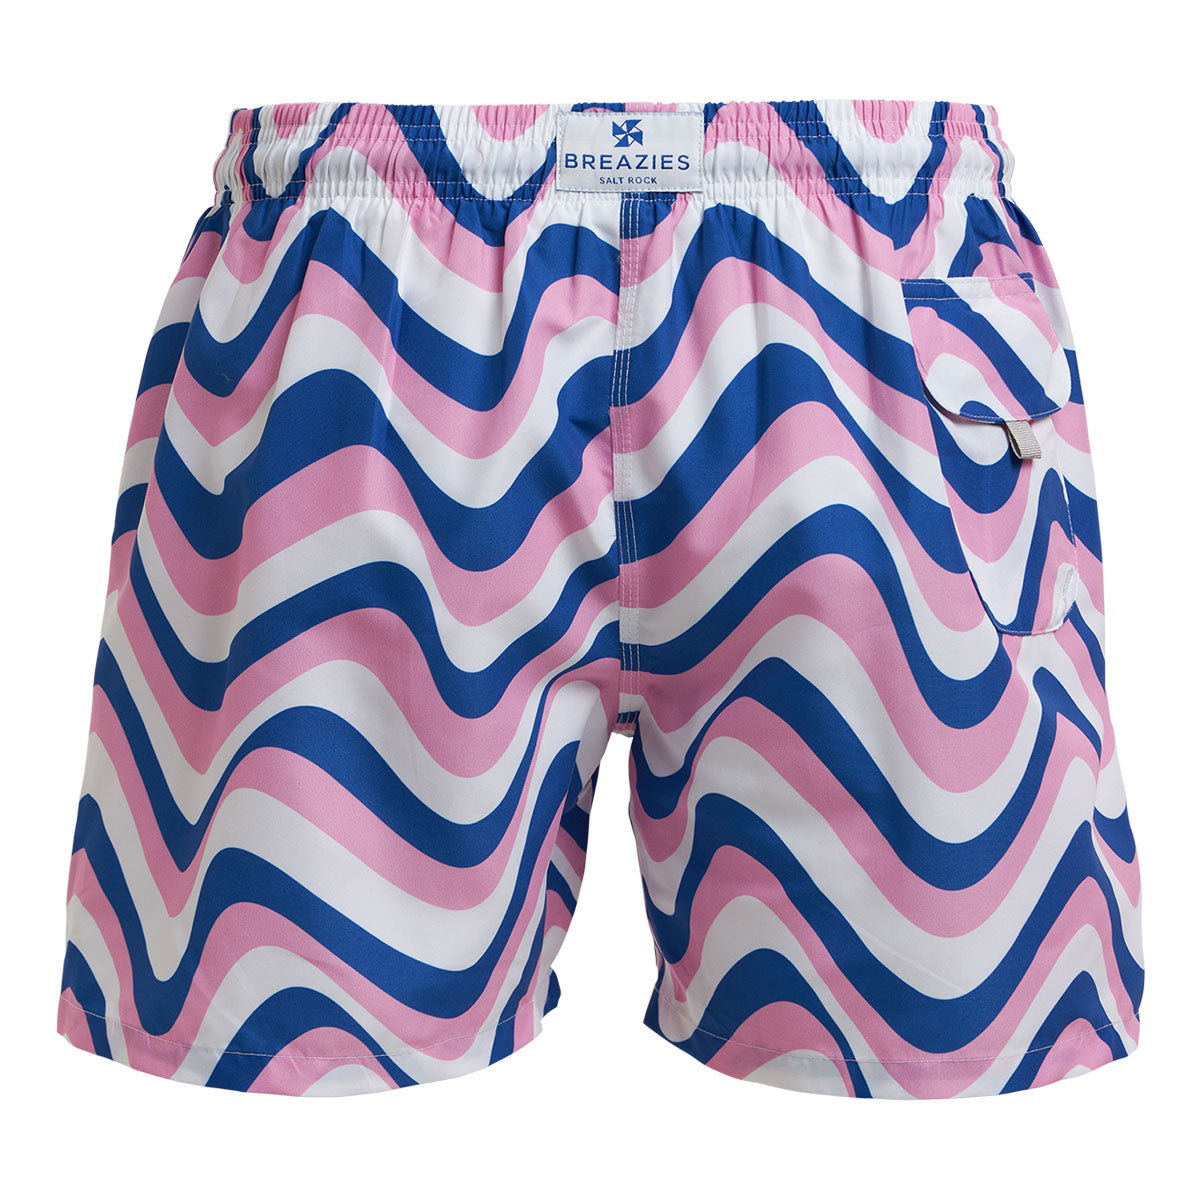 Swim Shorts - Retro Stripes | Candy